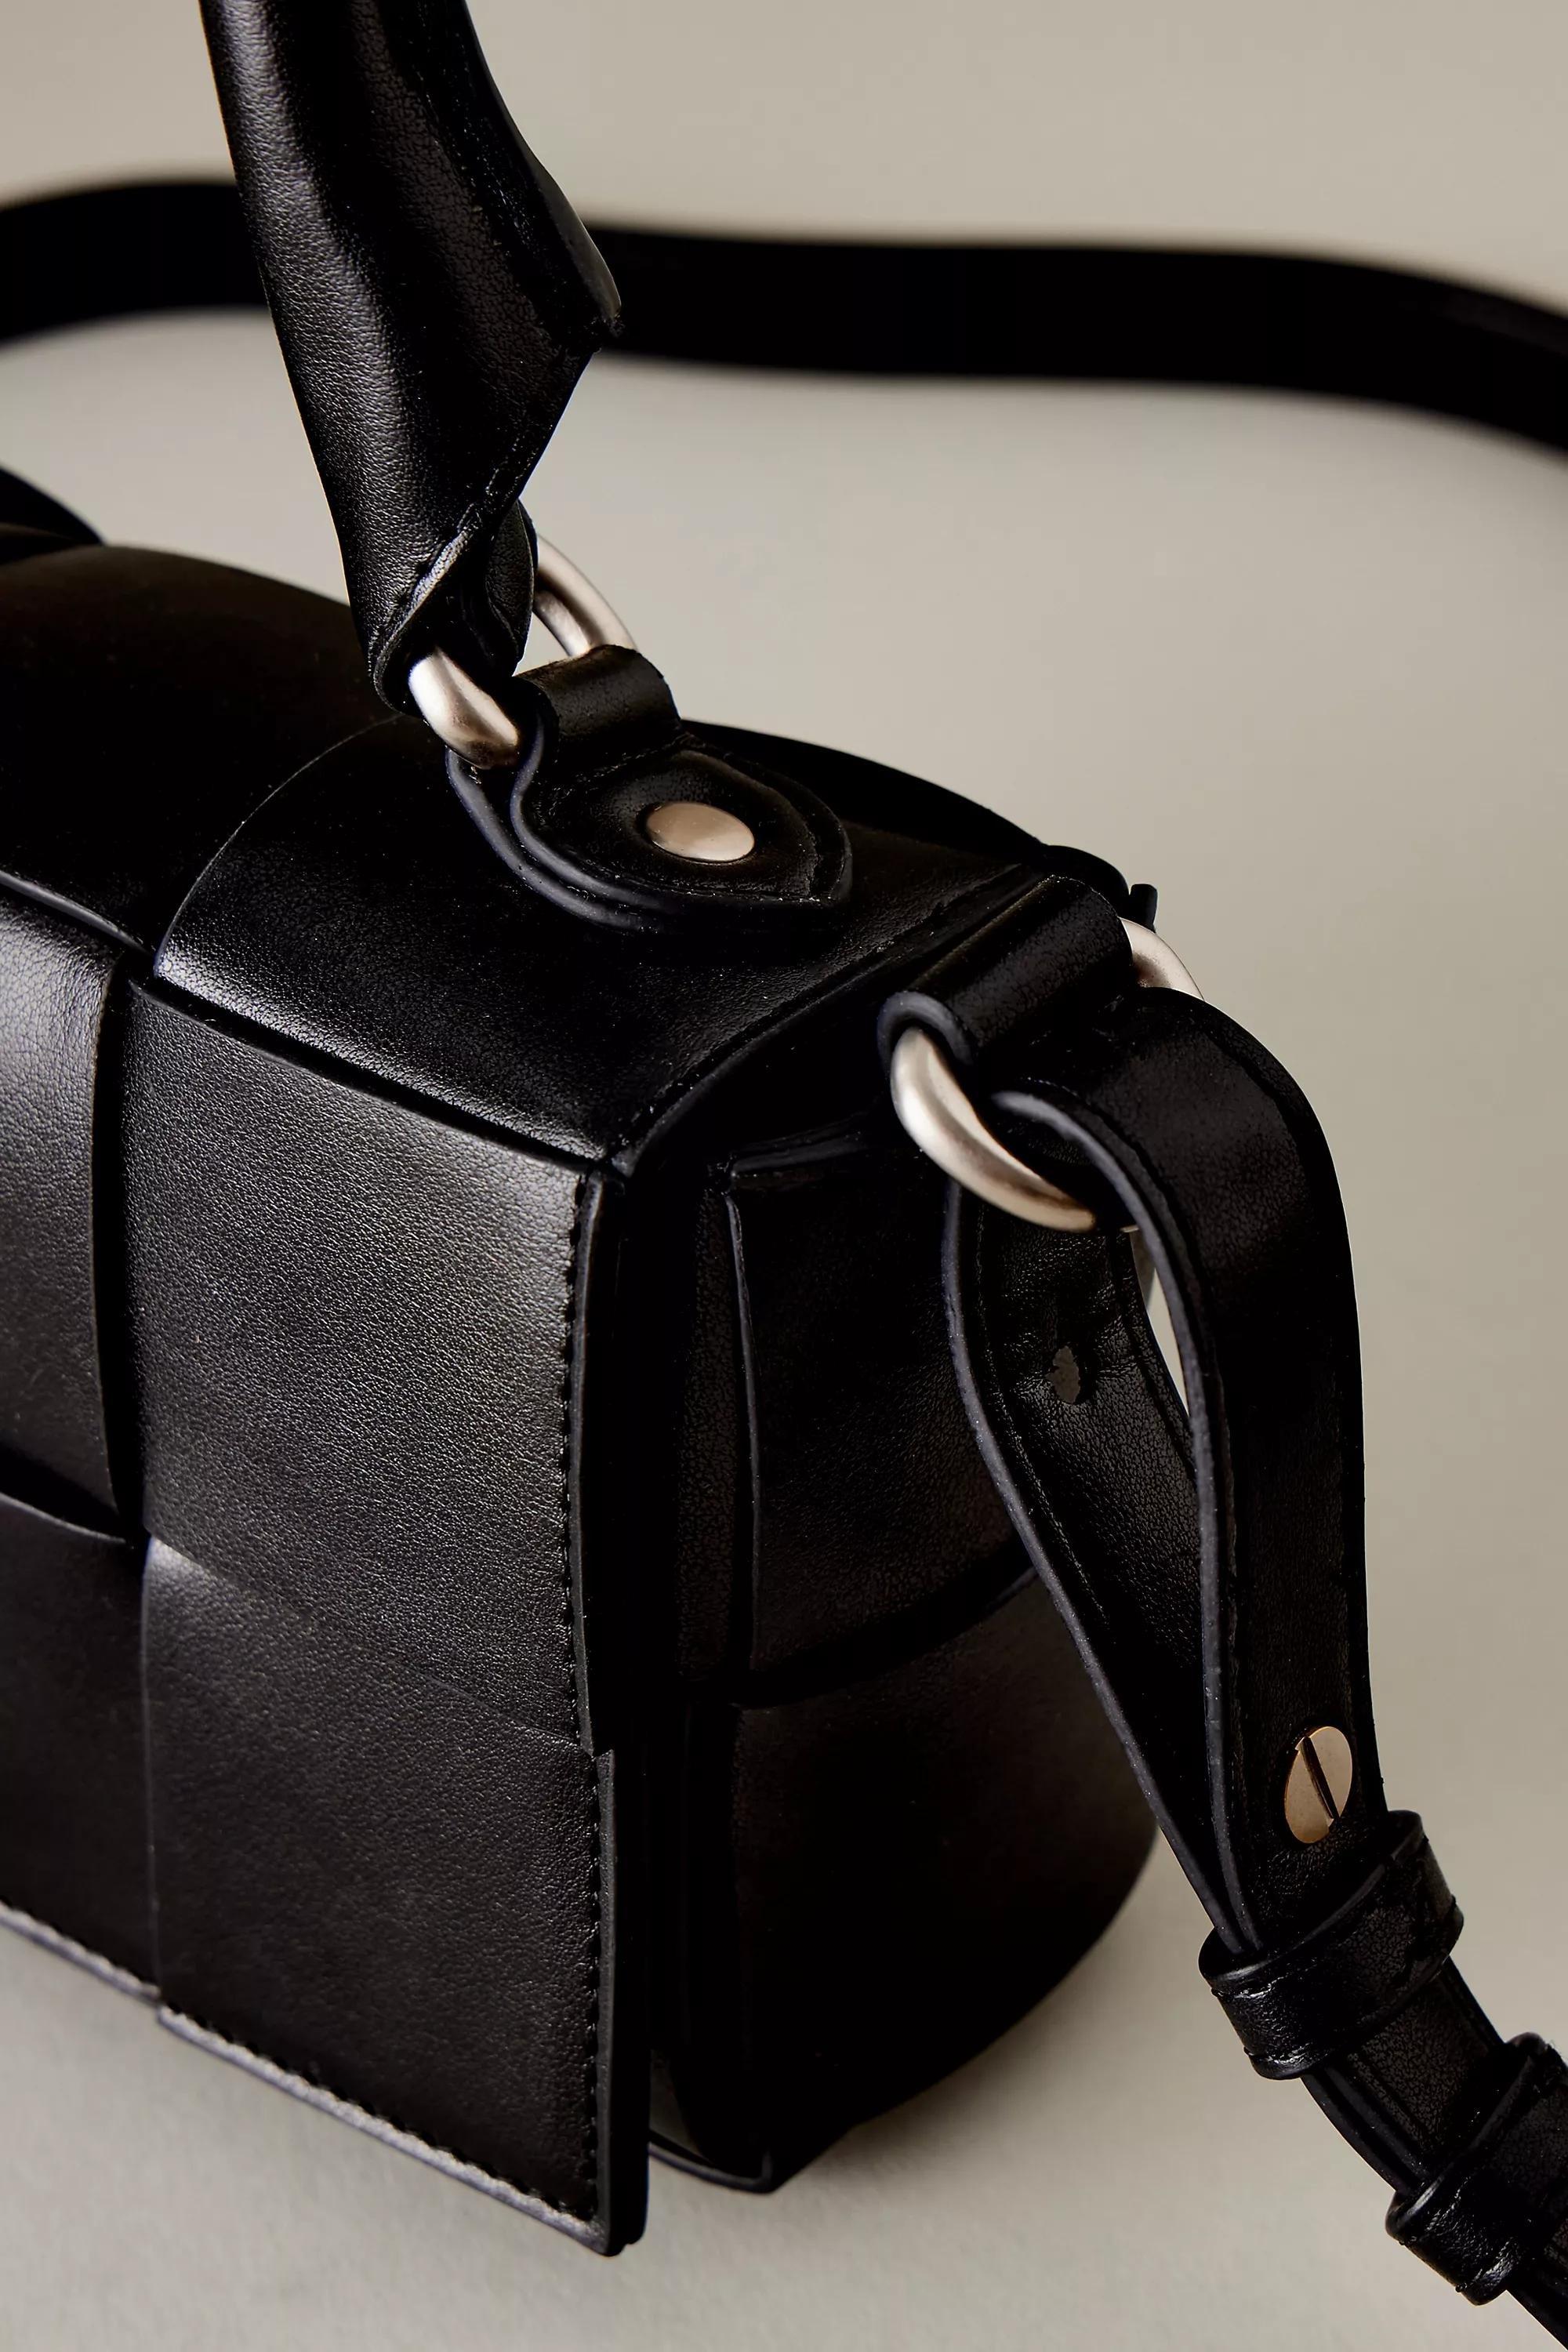 Anthropologie - Woven Leather Micro Crossbody Hand Bag, Black